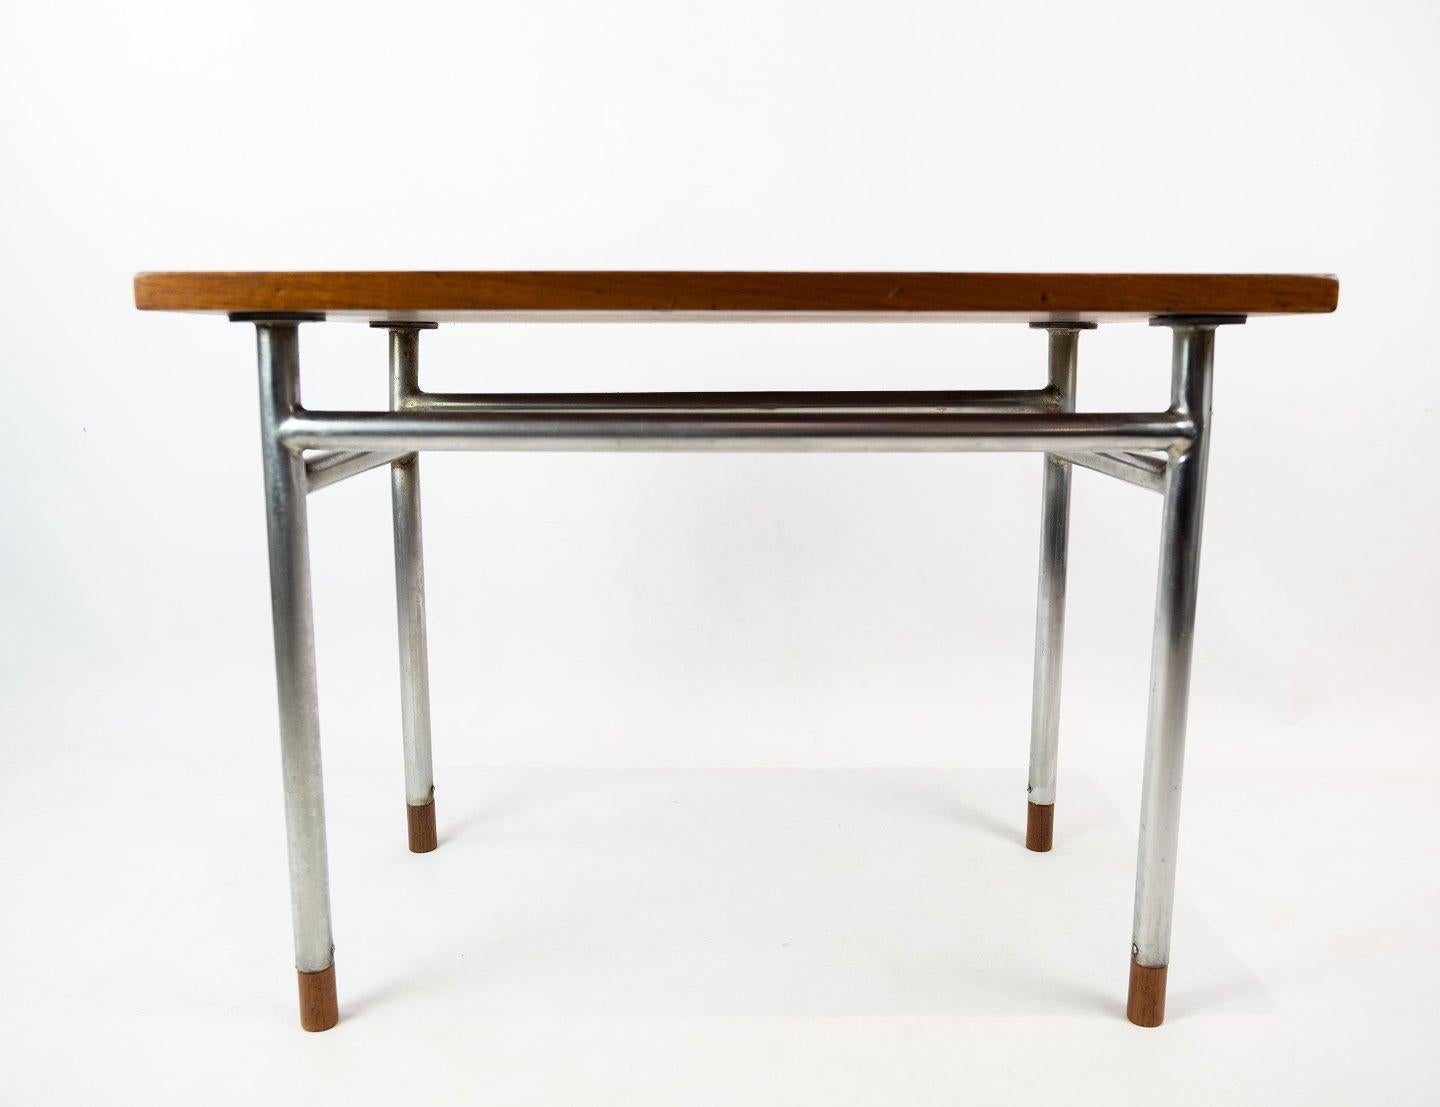 Scandinavian Modern Coffee Table in Teak and Legs in Metal, Designed by Hans J. Wegner, 1960s For Sale